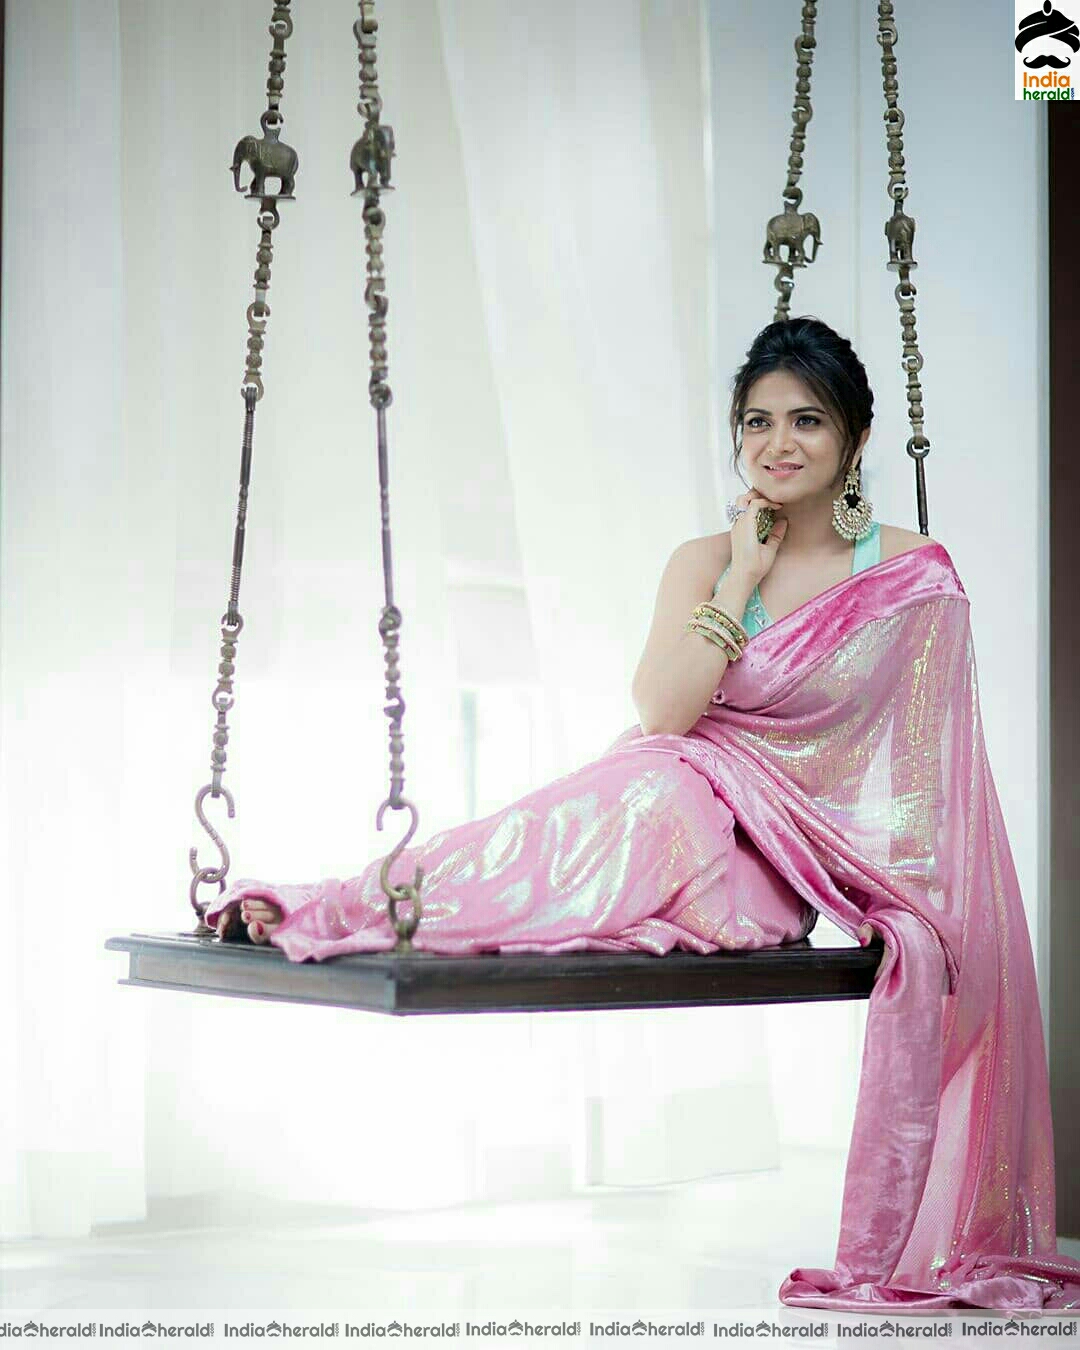 Brahmin Beauty cum TV Anchor DD Hot latest photos in Sleeveless blouse and saree